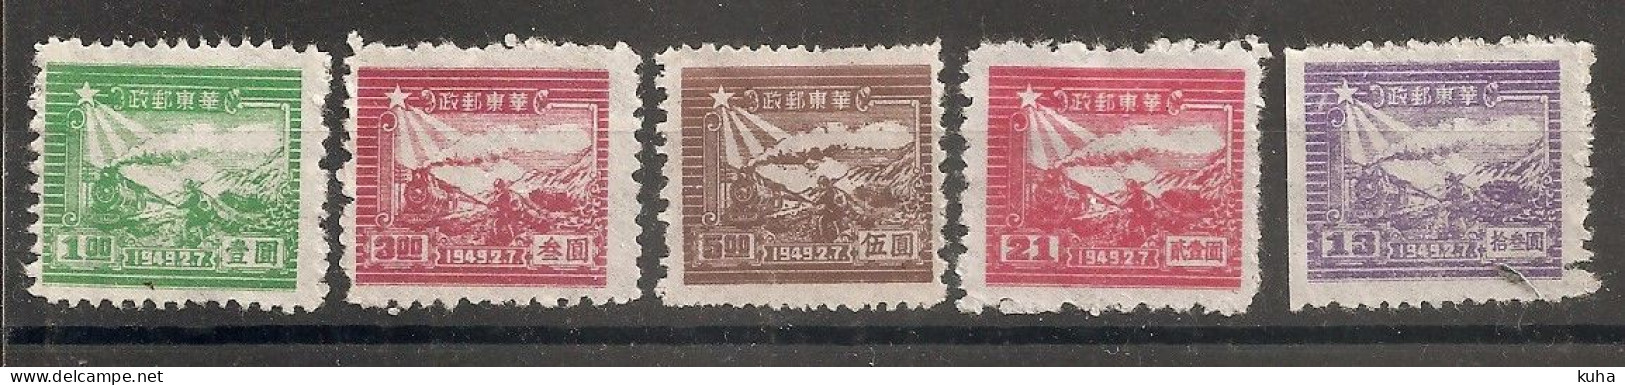 China Chine 1949 North China  MH & MNH - Chine Du Nord 1949-50